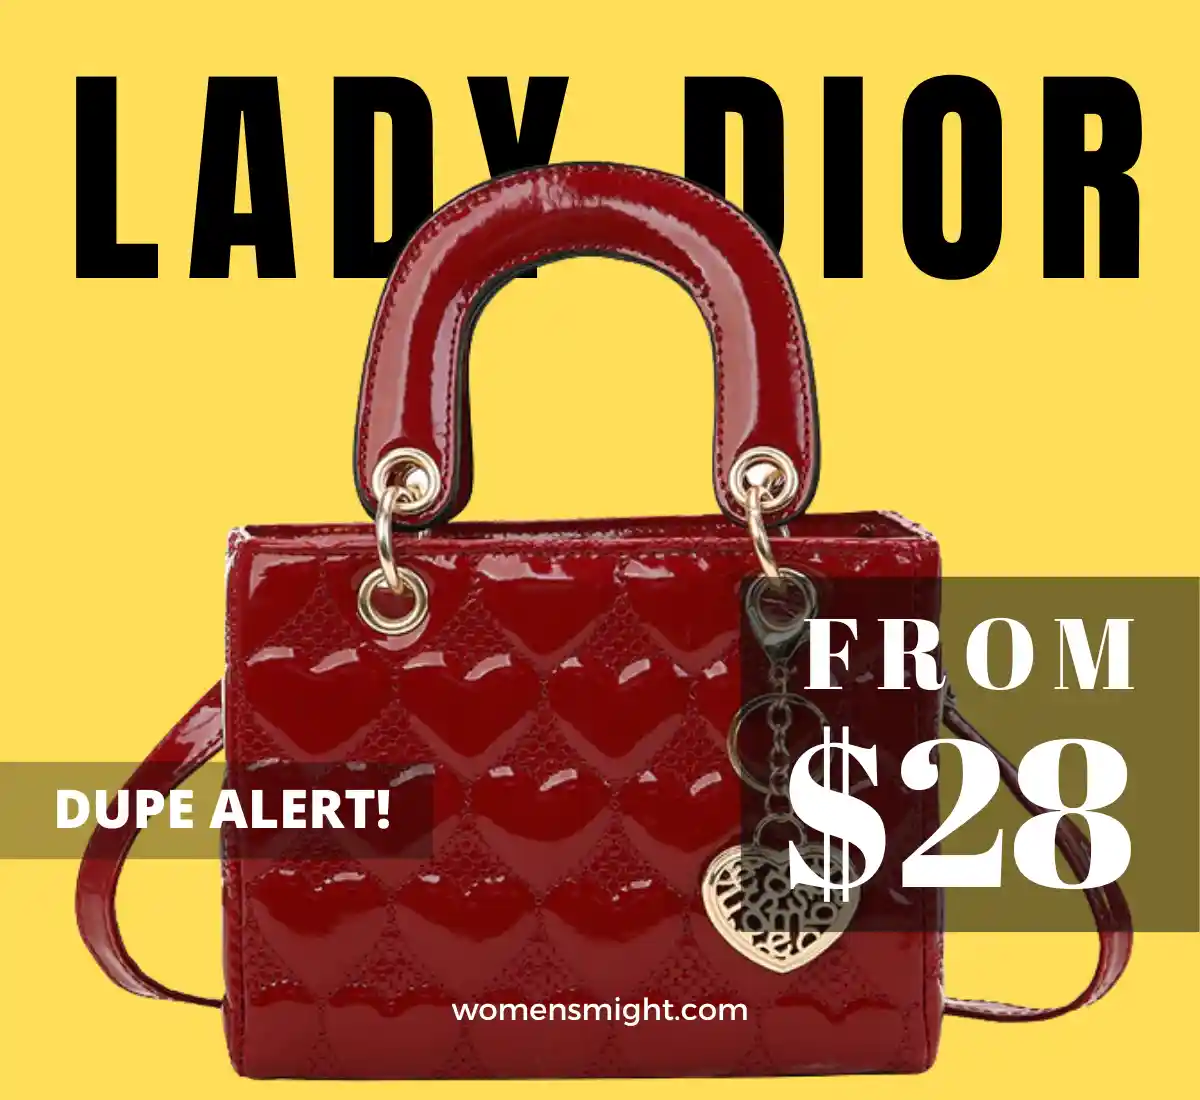 Christian Dior Lady Bag Dupe, YAY OR NAH? 🫤